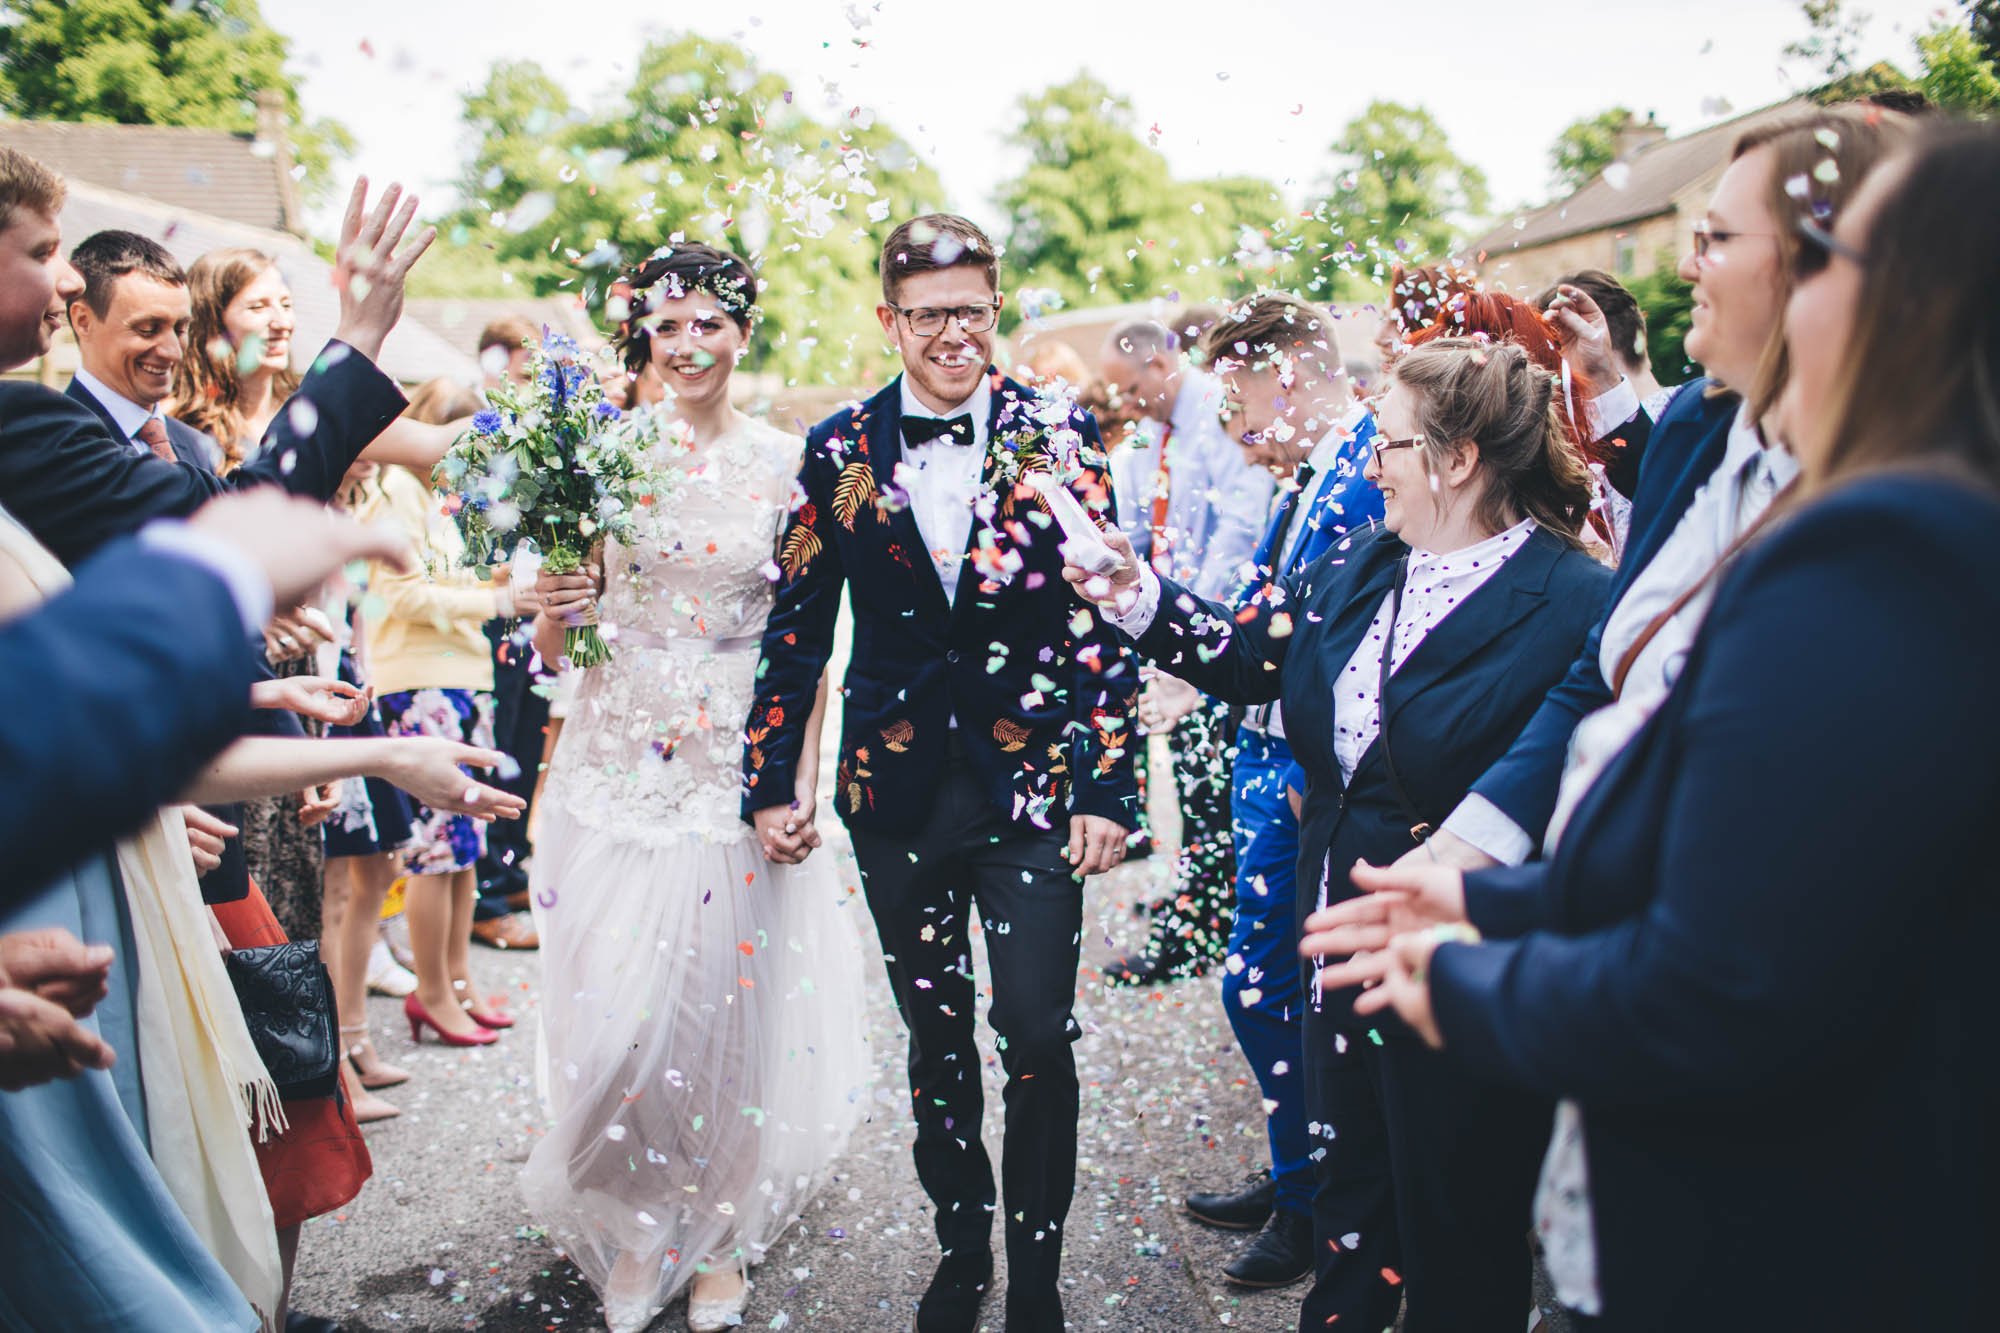 confetti throw on the wedding couple